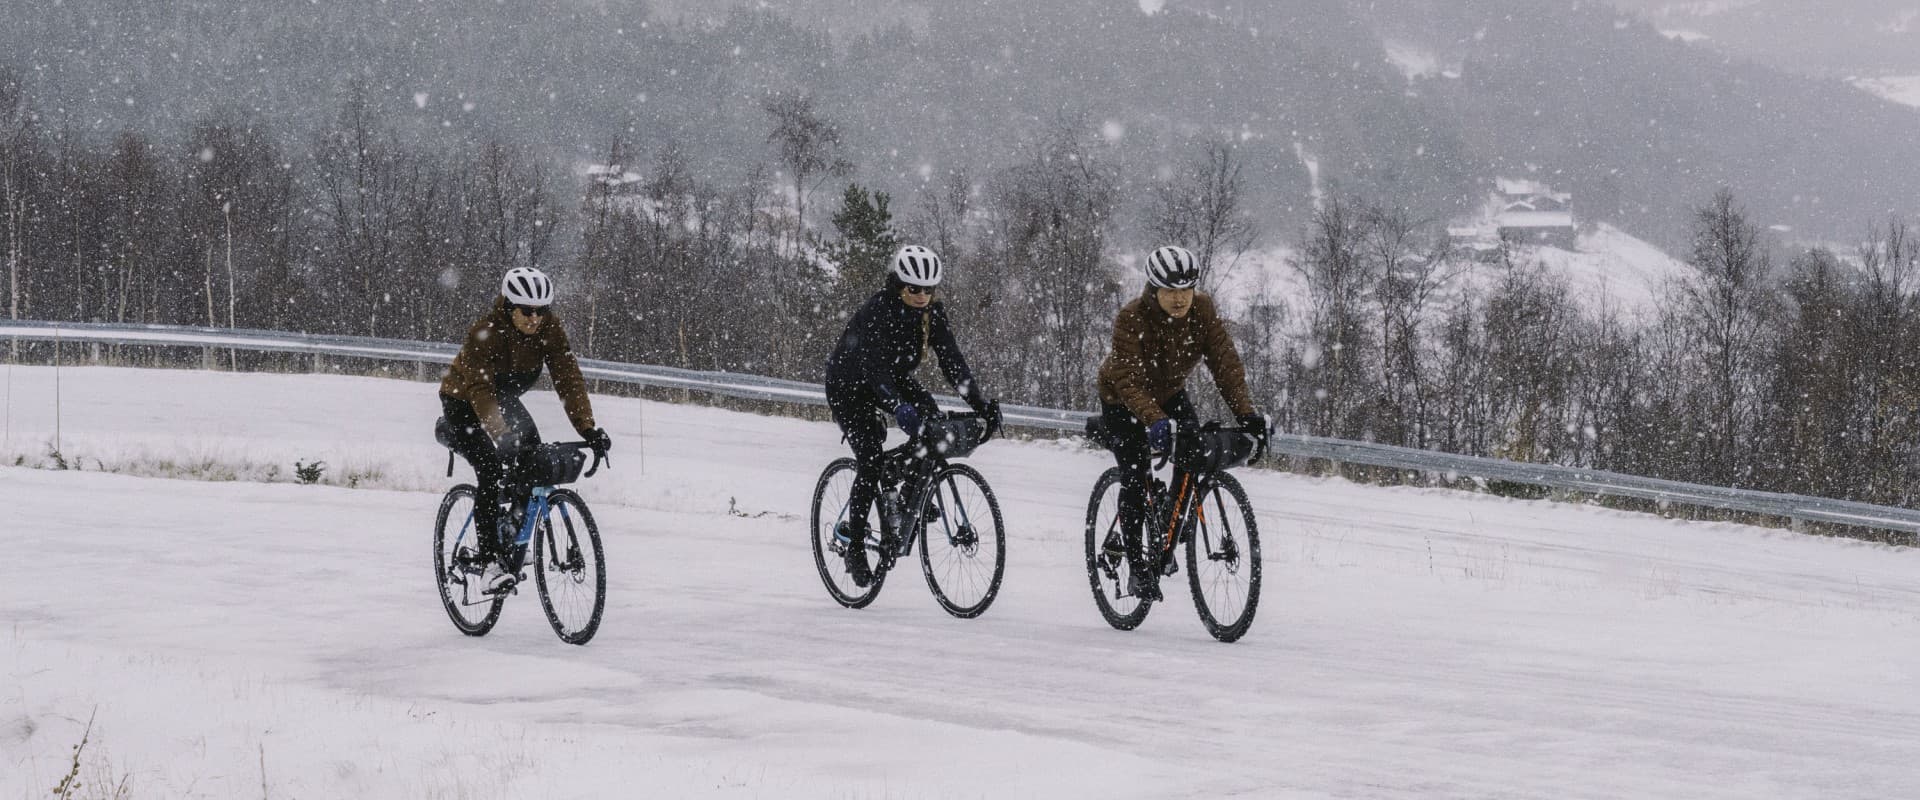 Header image. Three cyclists on snowy road.